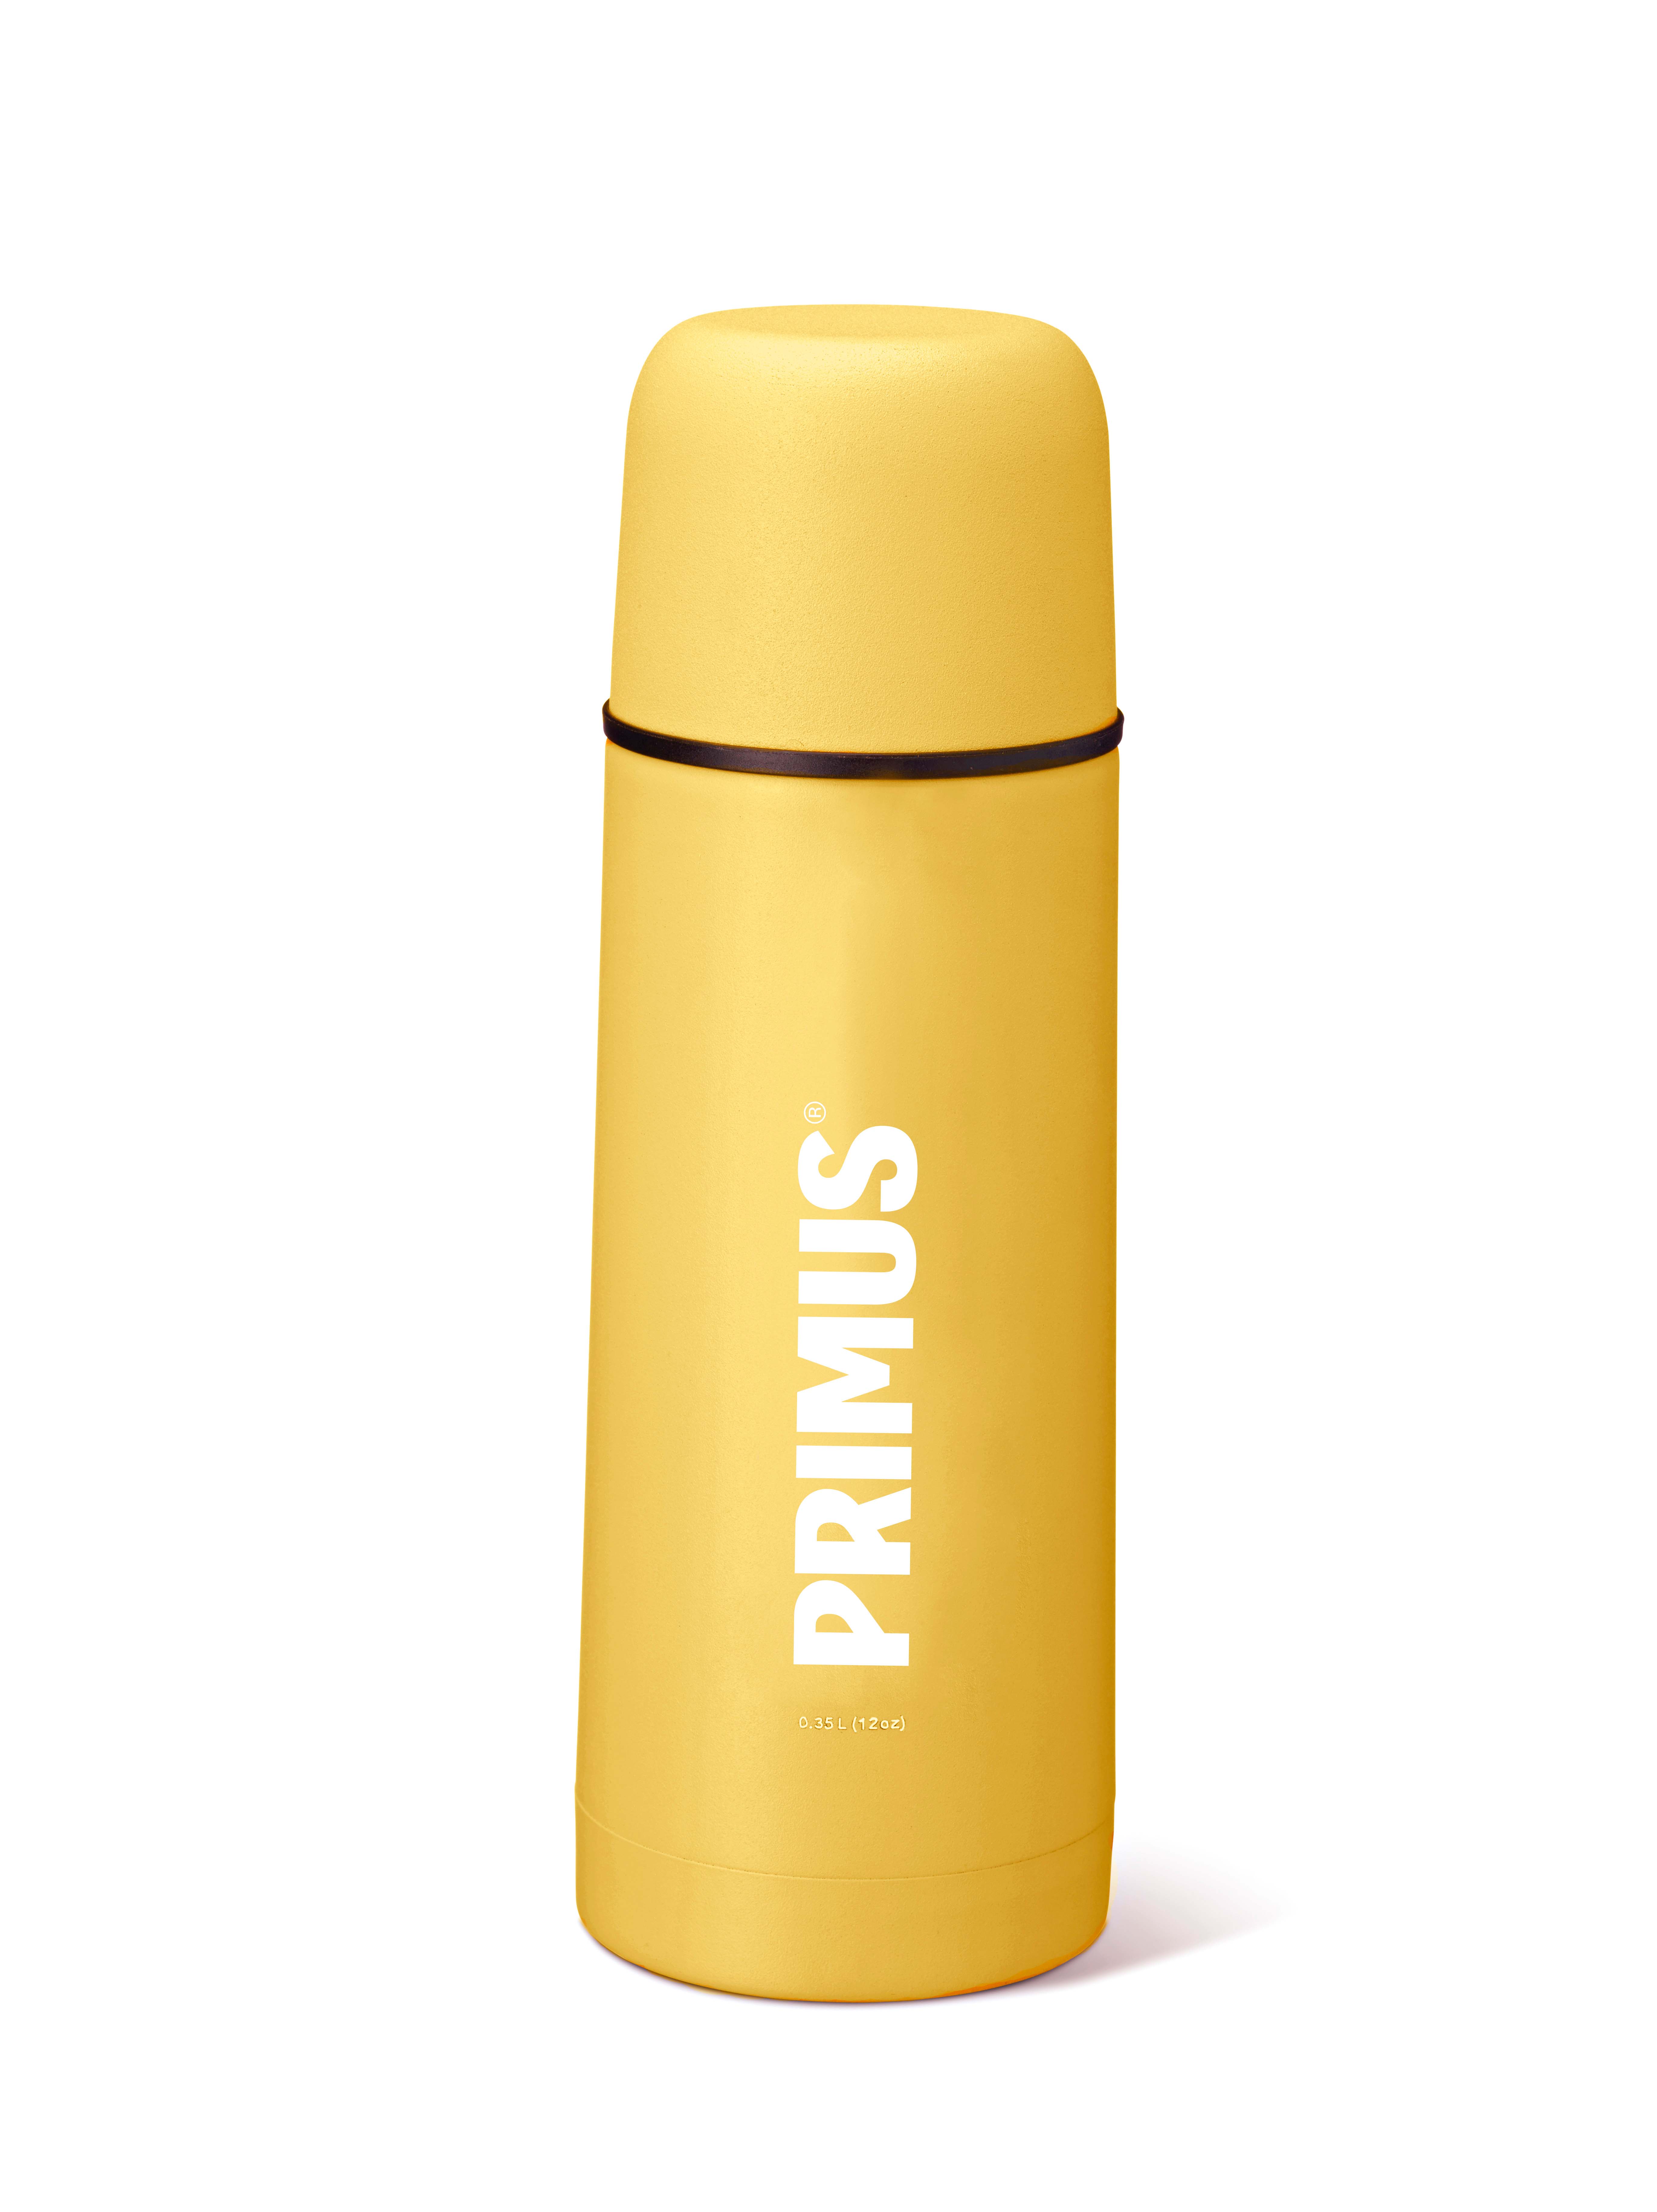 PRIMUS Thermoflasche - Isolierflasche